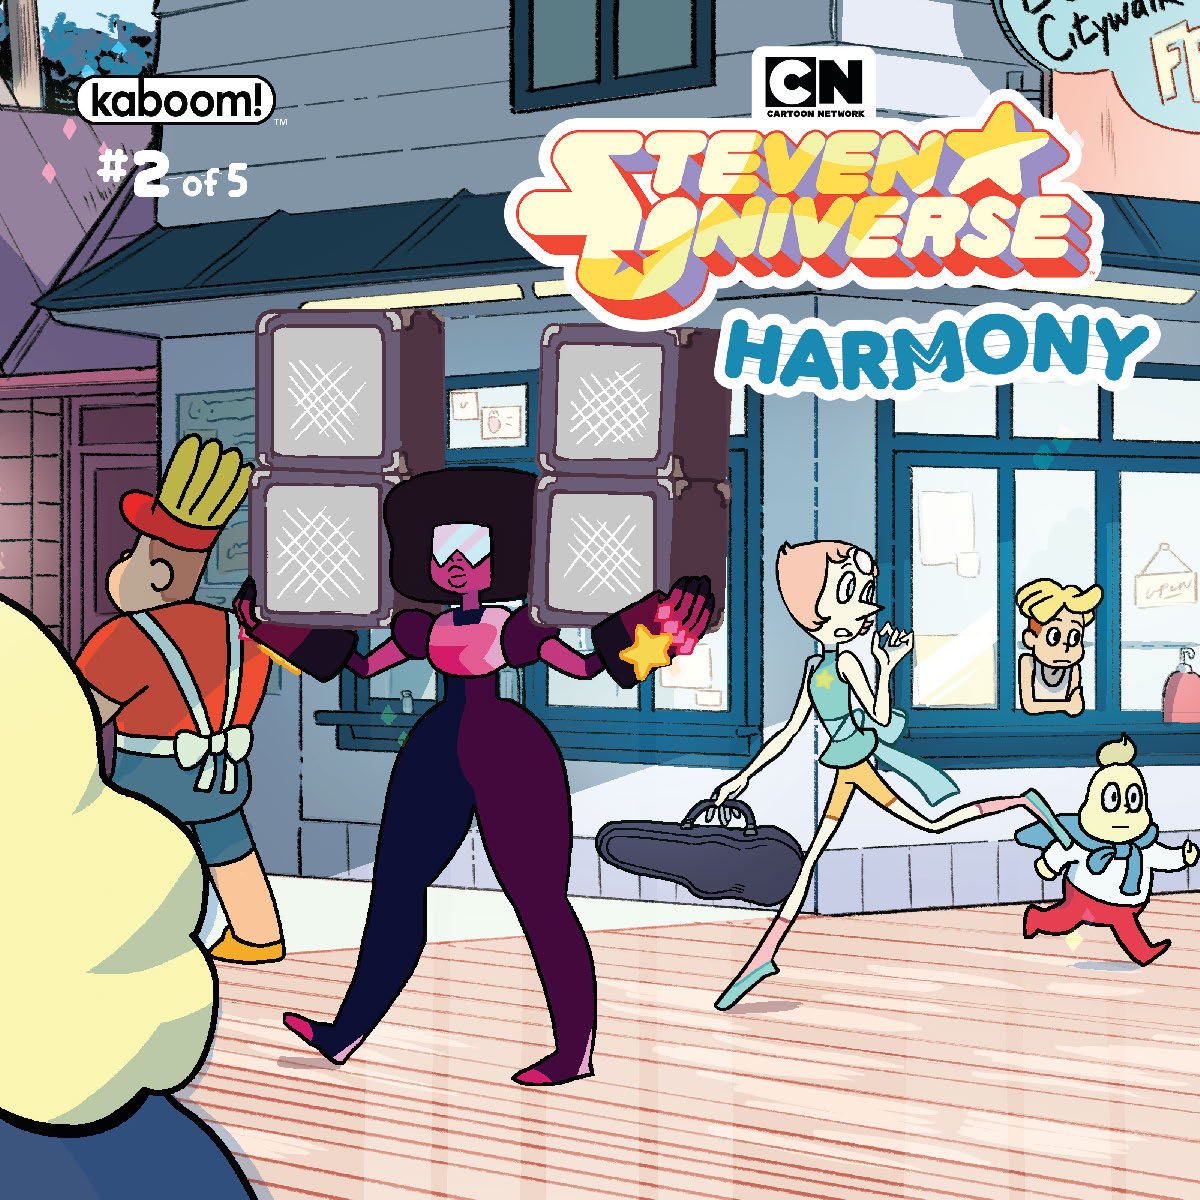 Steven Universo: Harmony Edição 2, Steven Universo Wiki